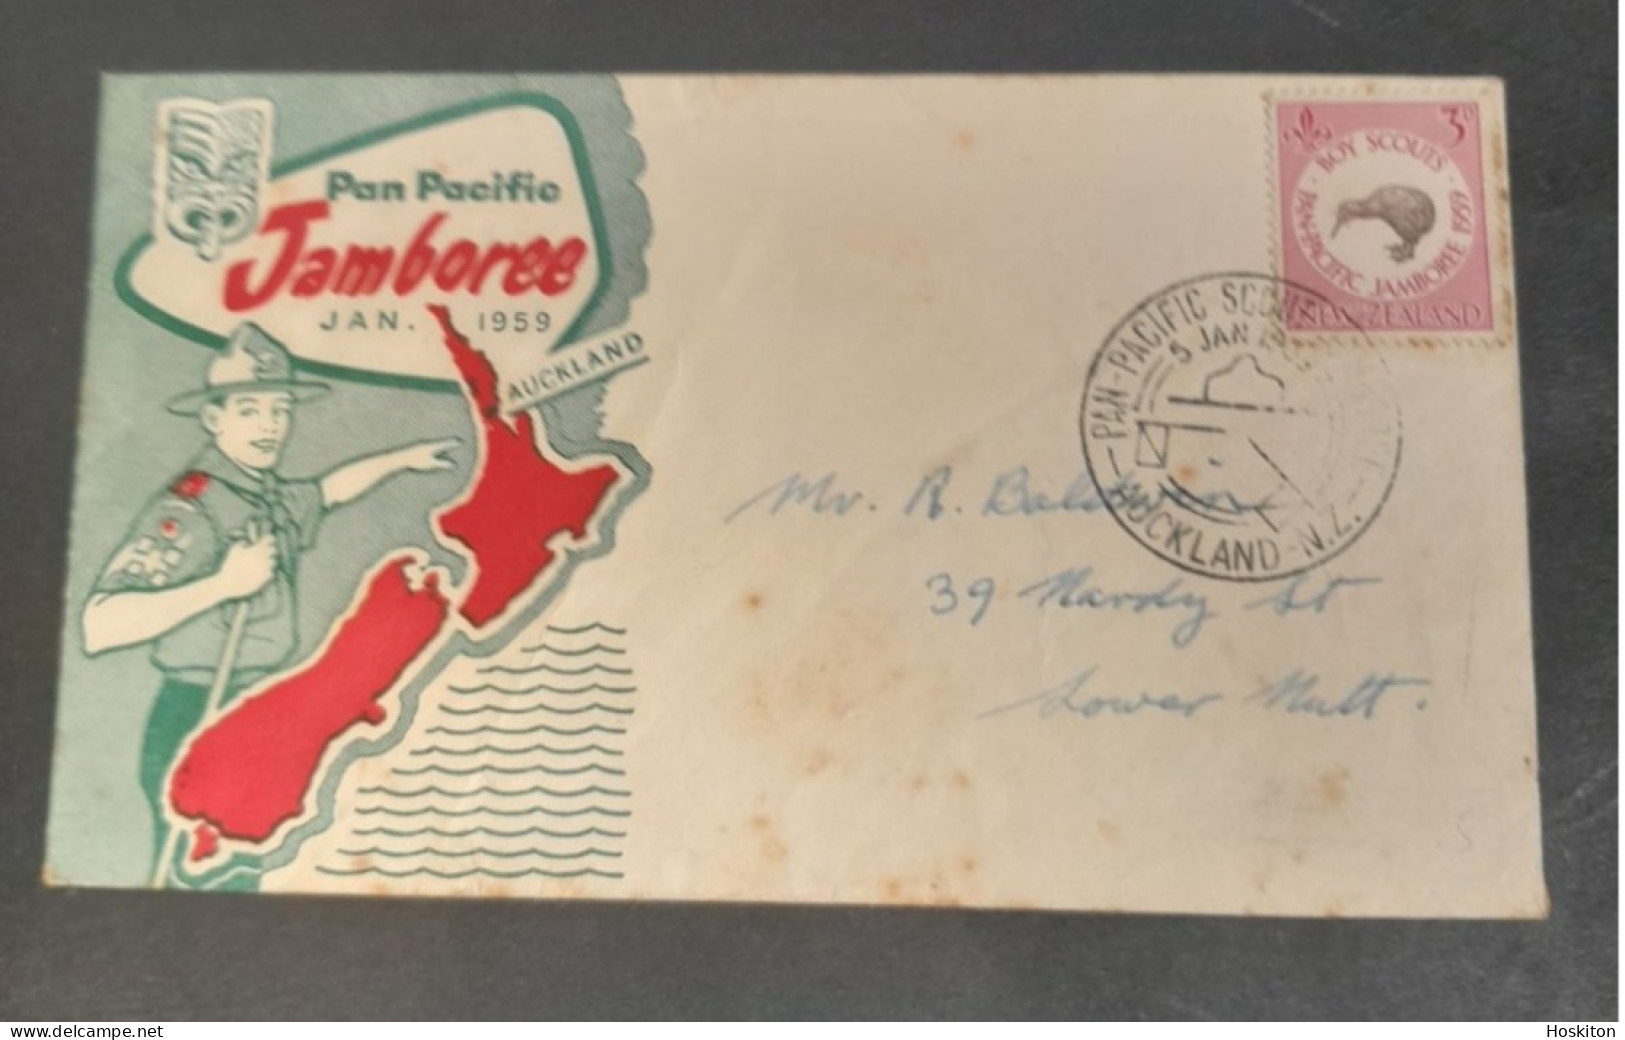 Pan Pacific Jamboree 1959 Auckland NZ - Lettres & Documents